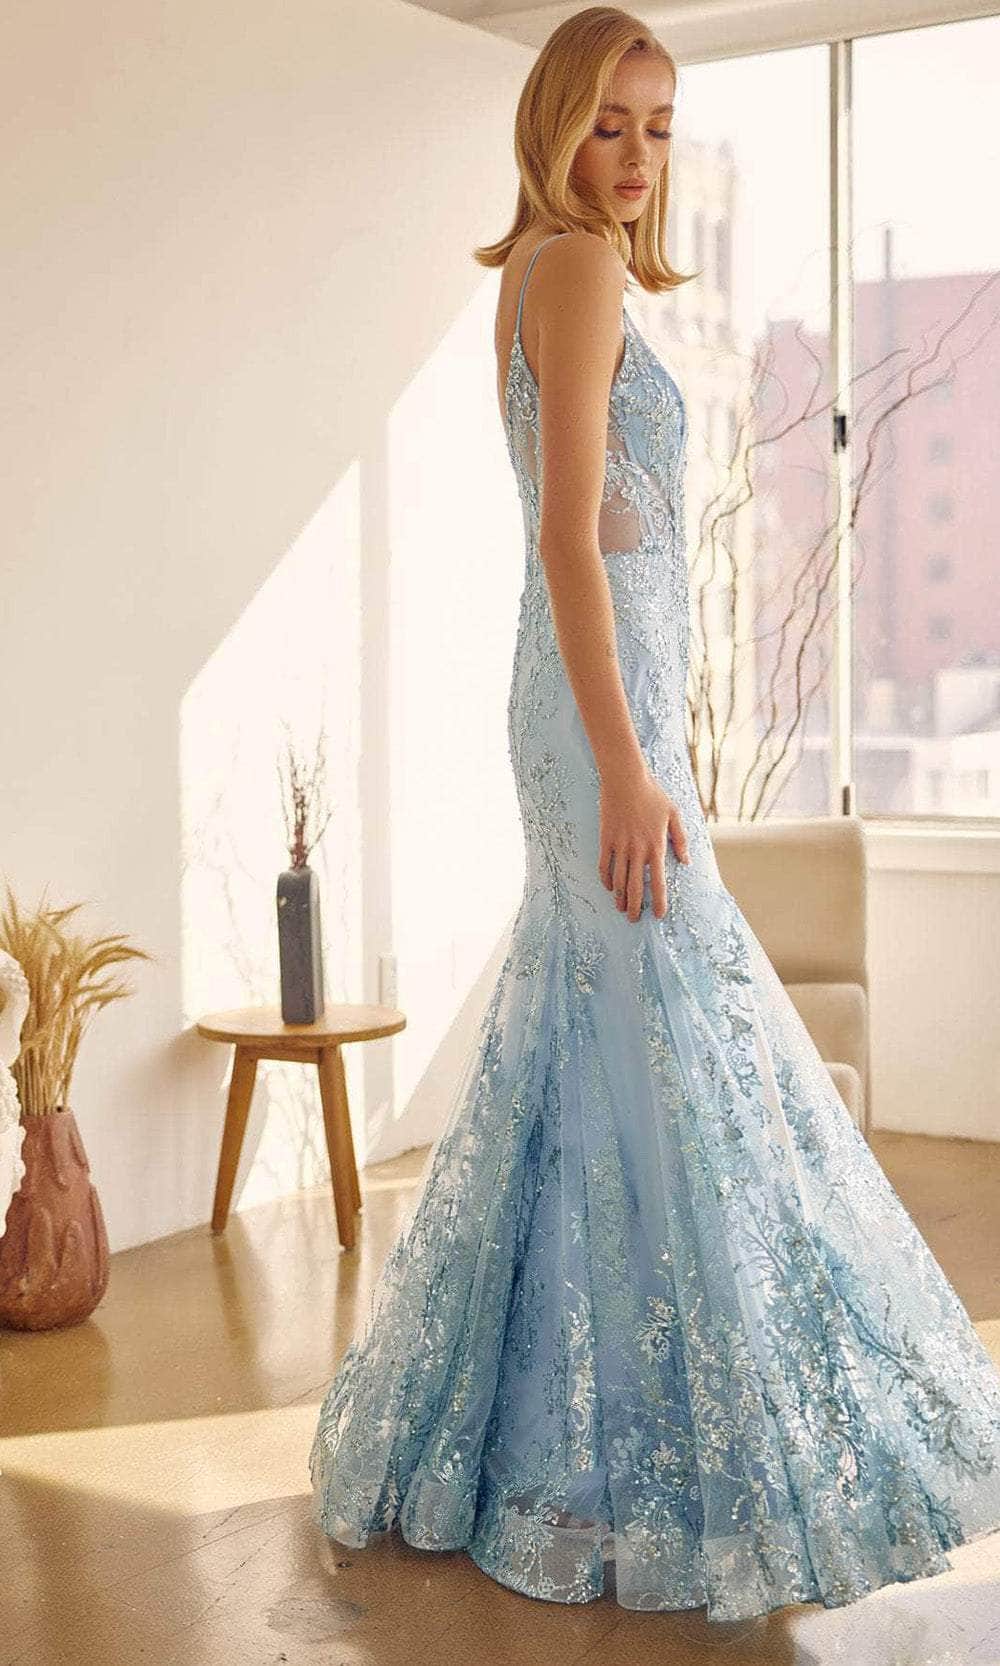 Juliet Dresses 274 - Illusion Corset Mermaid Prom Gown Prom Dresses